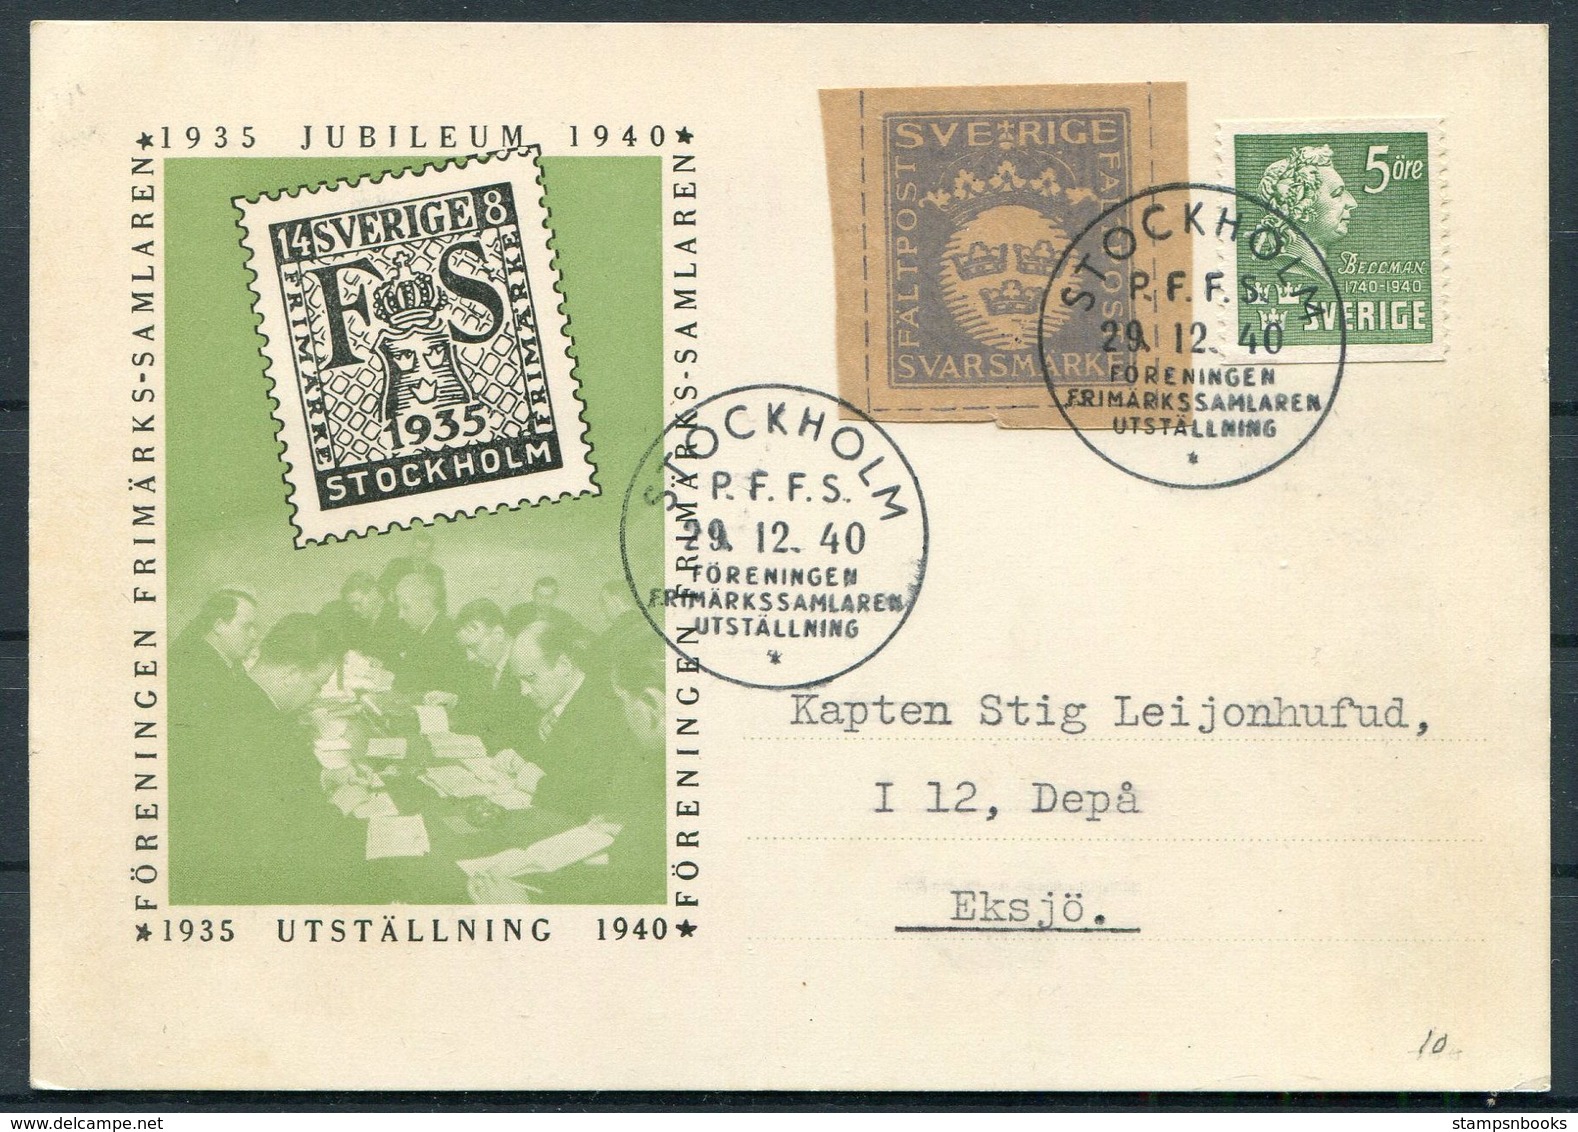 1940 Sweden Svarsmarke Faltpost Postcard. Stockholm P.F.F.S. Philatelic Exhibition - Military